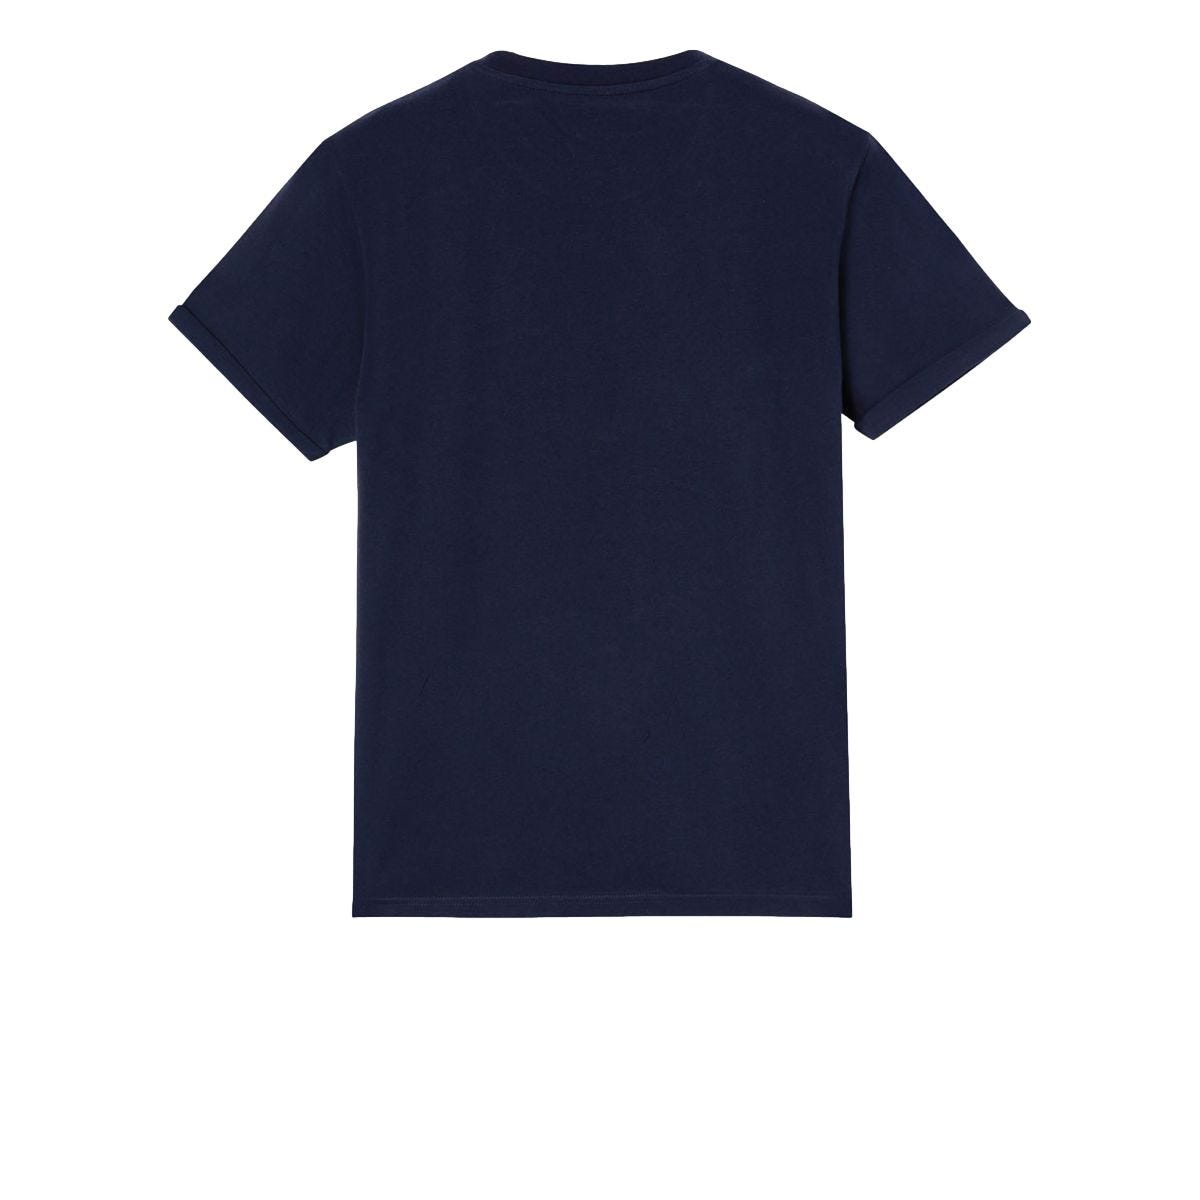 T-shirt de travail Denison bleu marine - Dickies - Taille 2XL 2